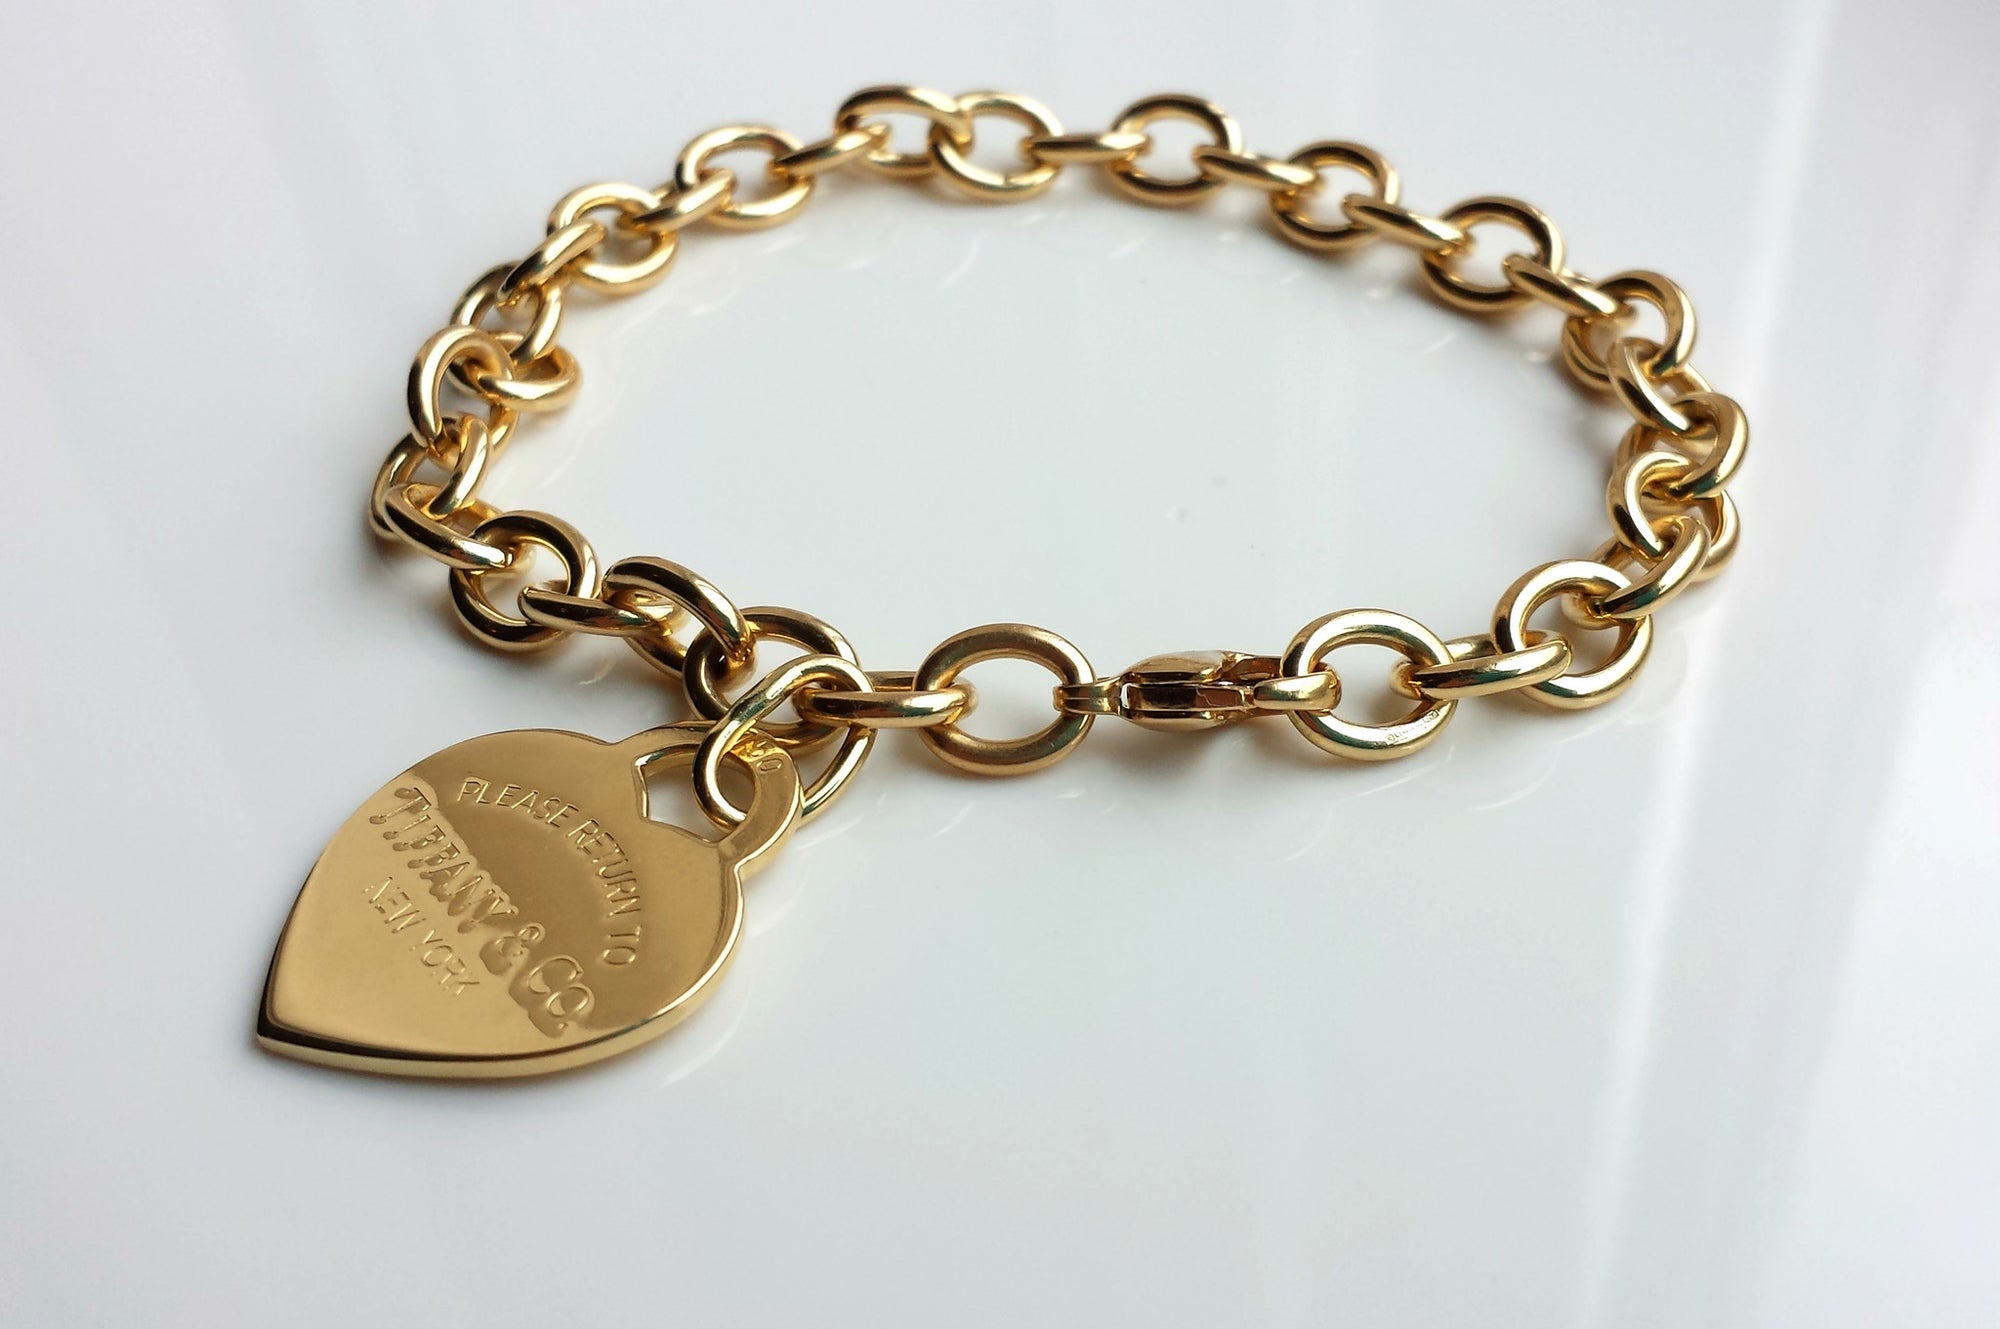 Tiffany & Co. 18k Yellow Gold Return to Heart Charm Bracelet – Large